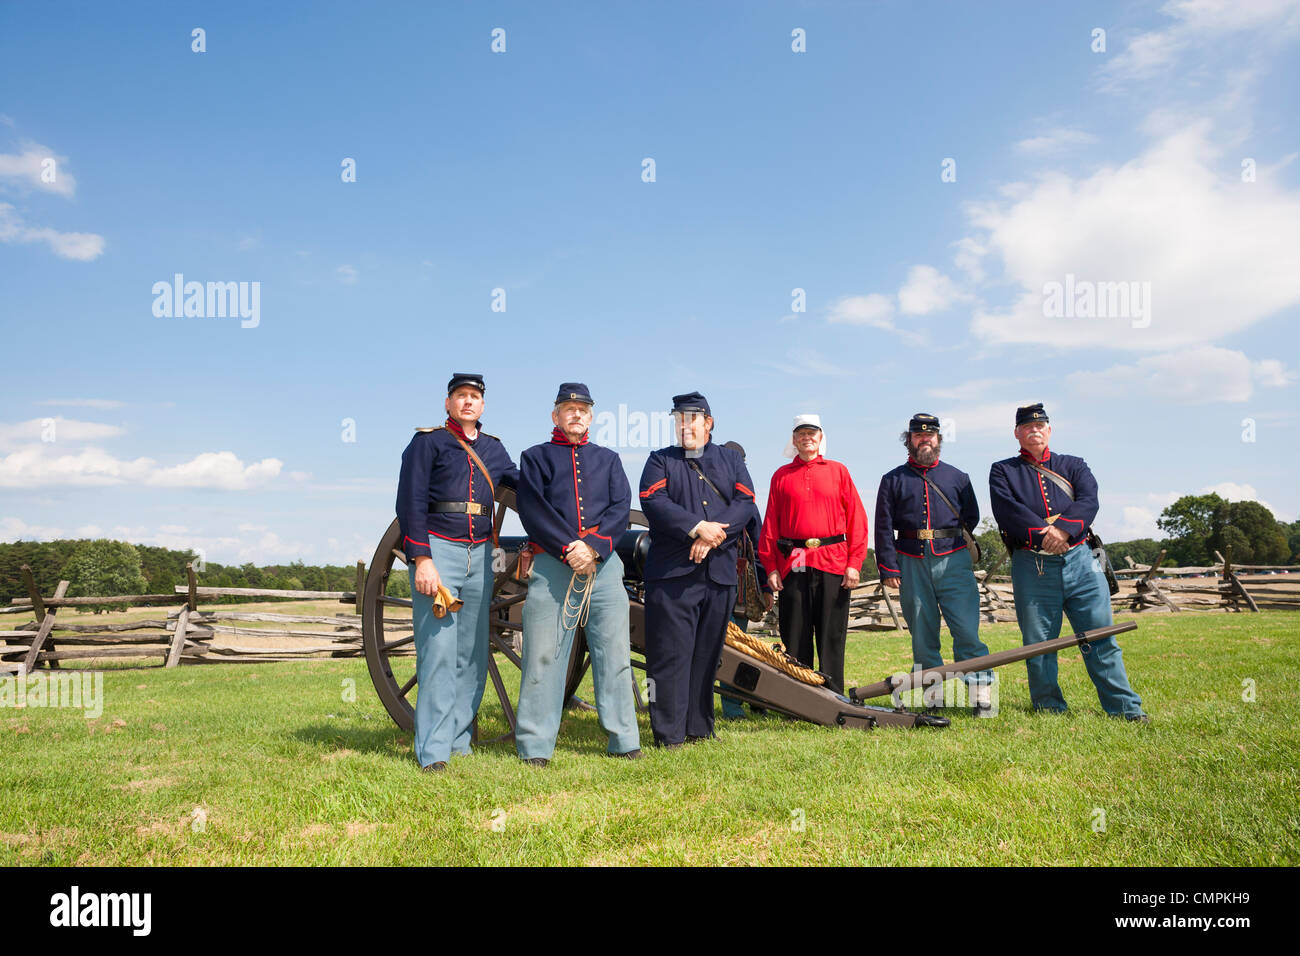 Manassas National Battlefield Park. American Civil War Reenactment am Henry-Haus-Hügel. Soldaten posiert w Parrott Gewehr Canon. Stockfoto